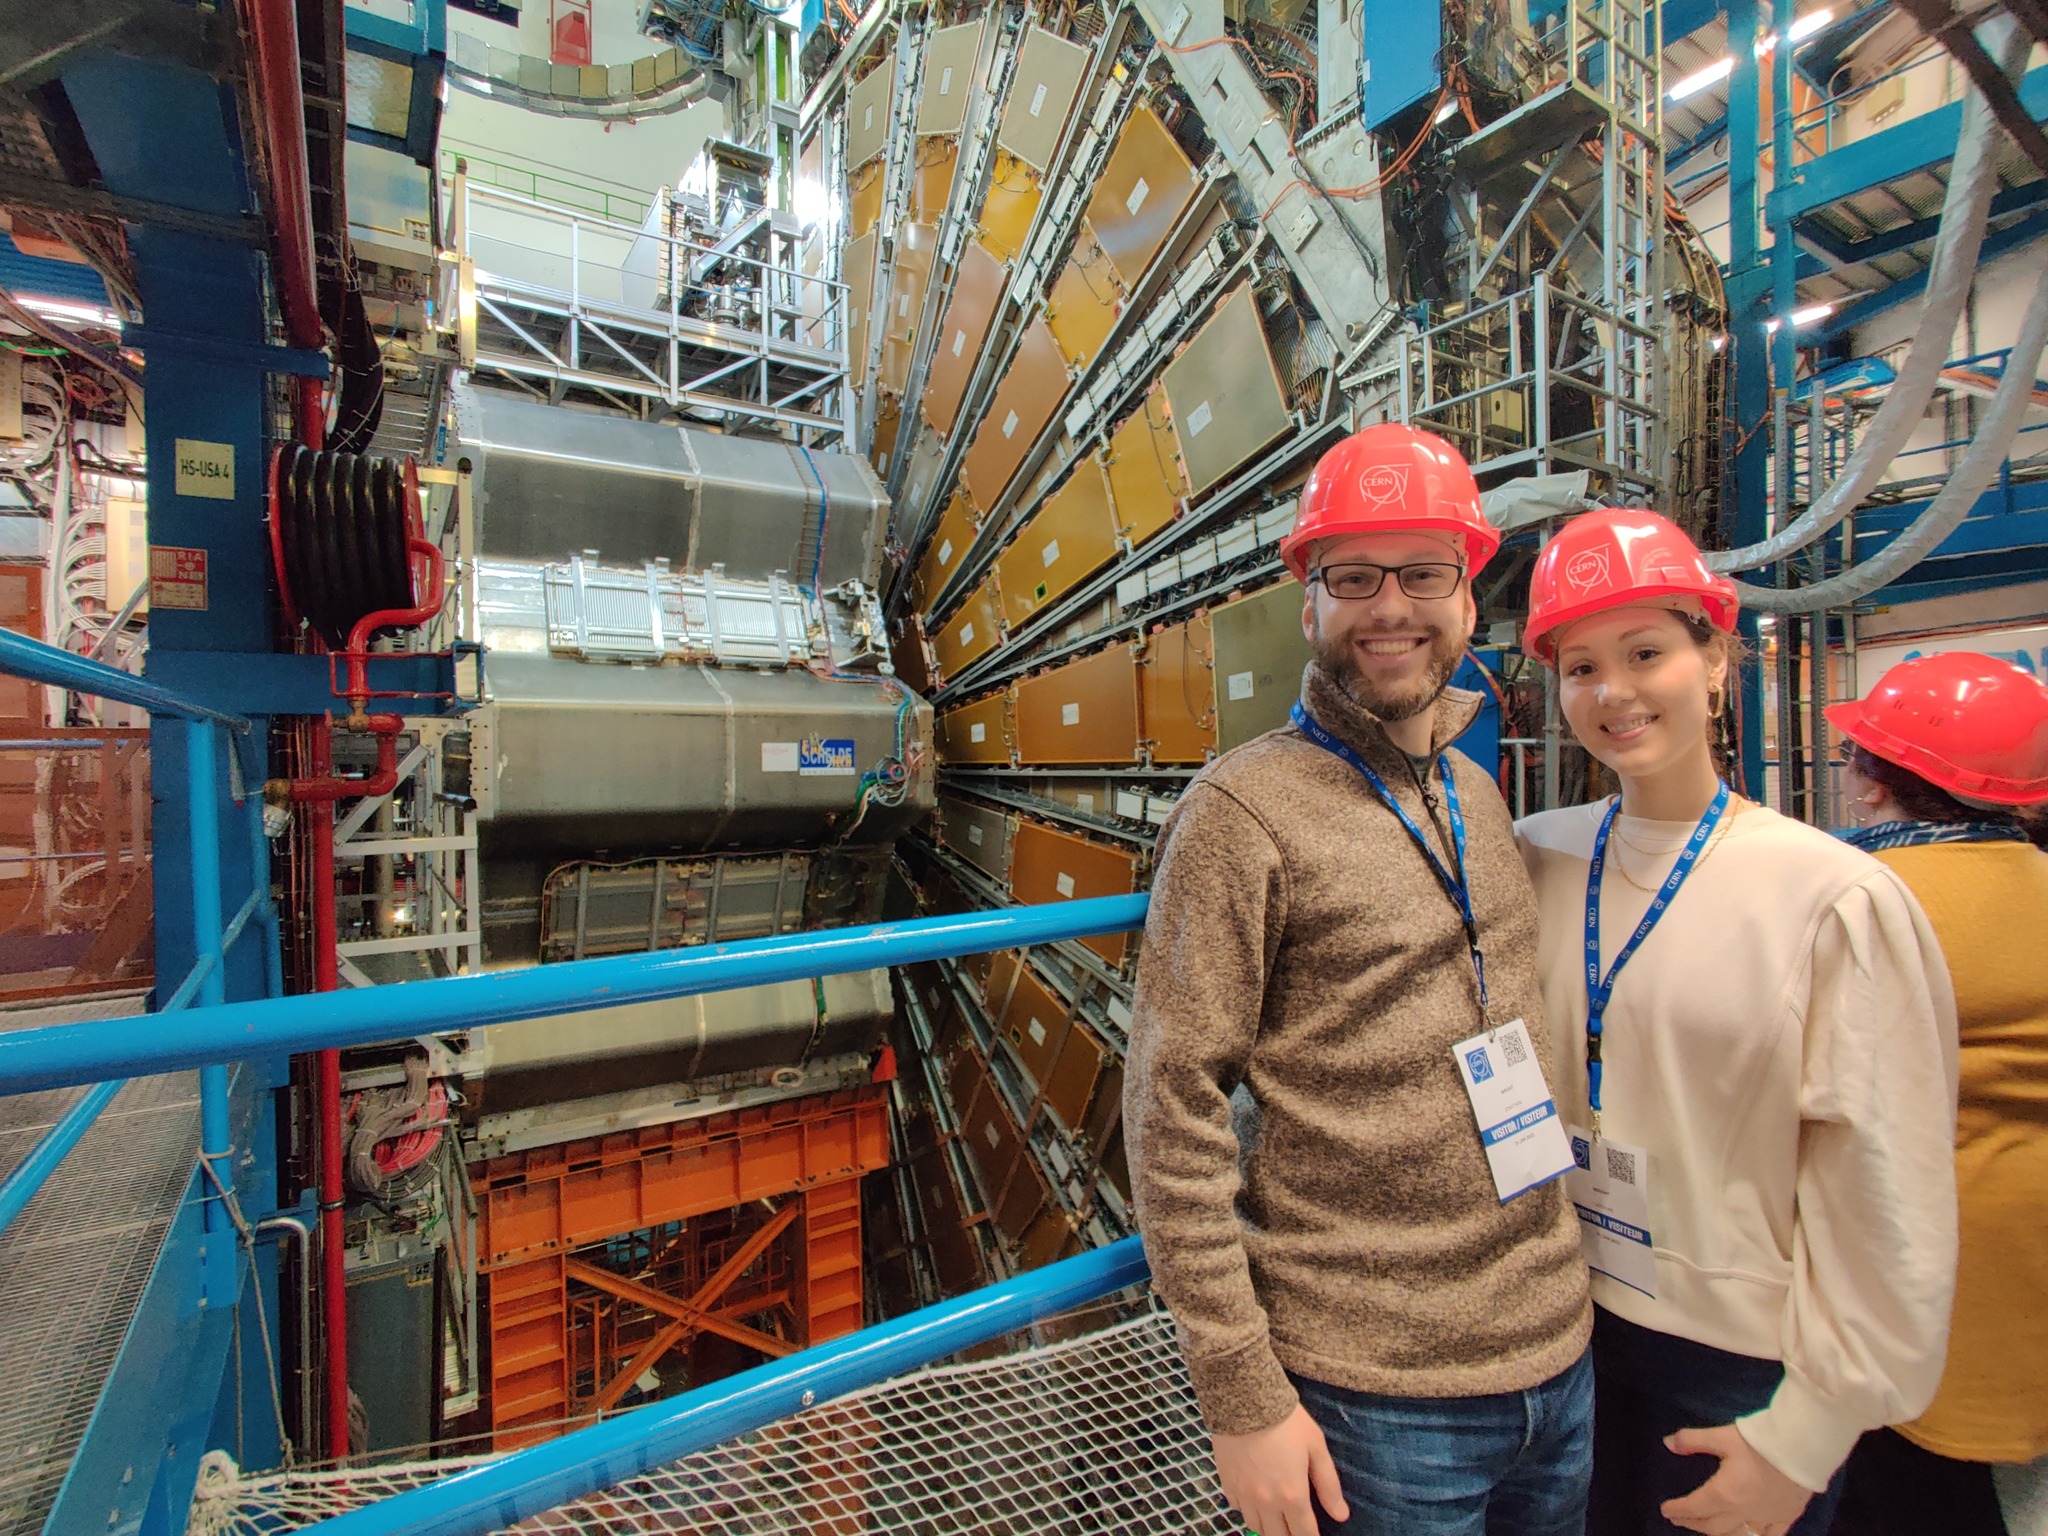 Jonathan and Caroline at CERN